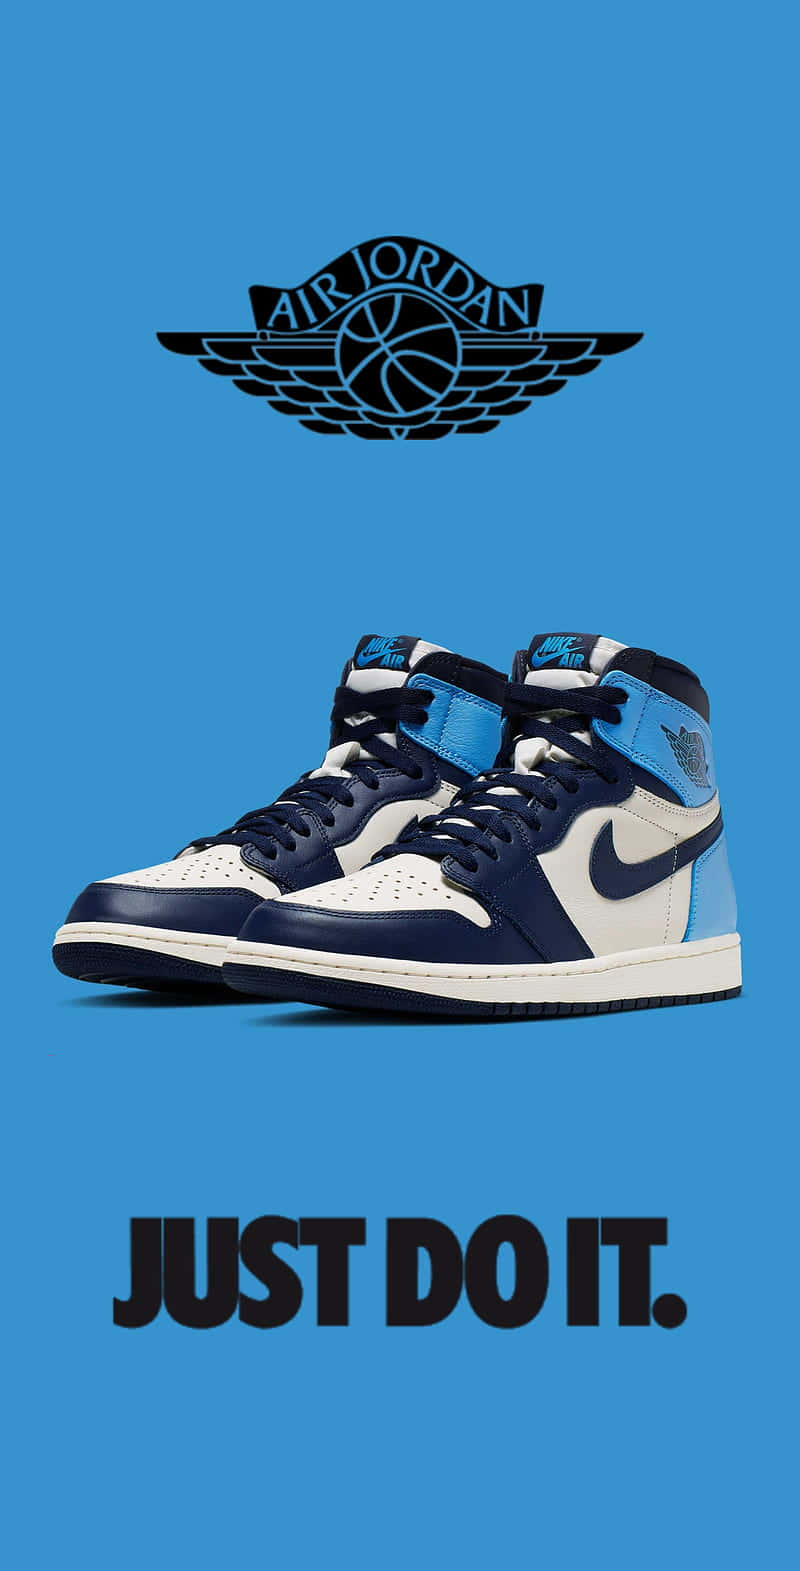 Blaueweiße Nike Jordan Air-schuhe. Wallpaper